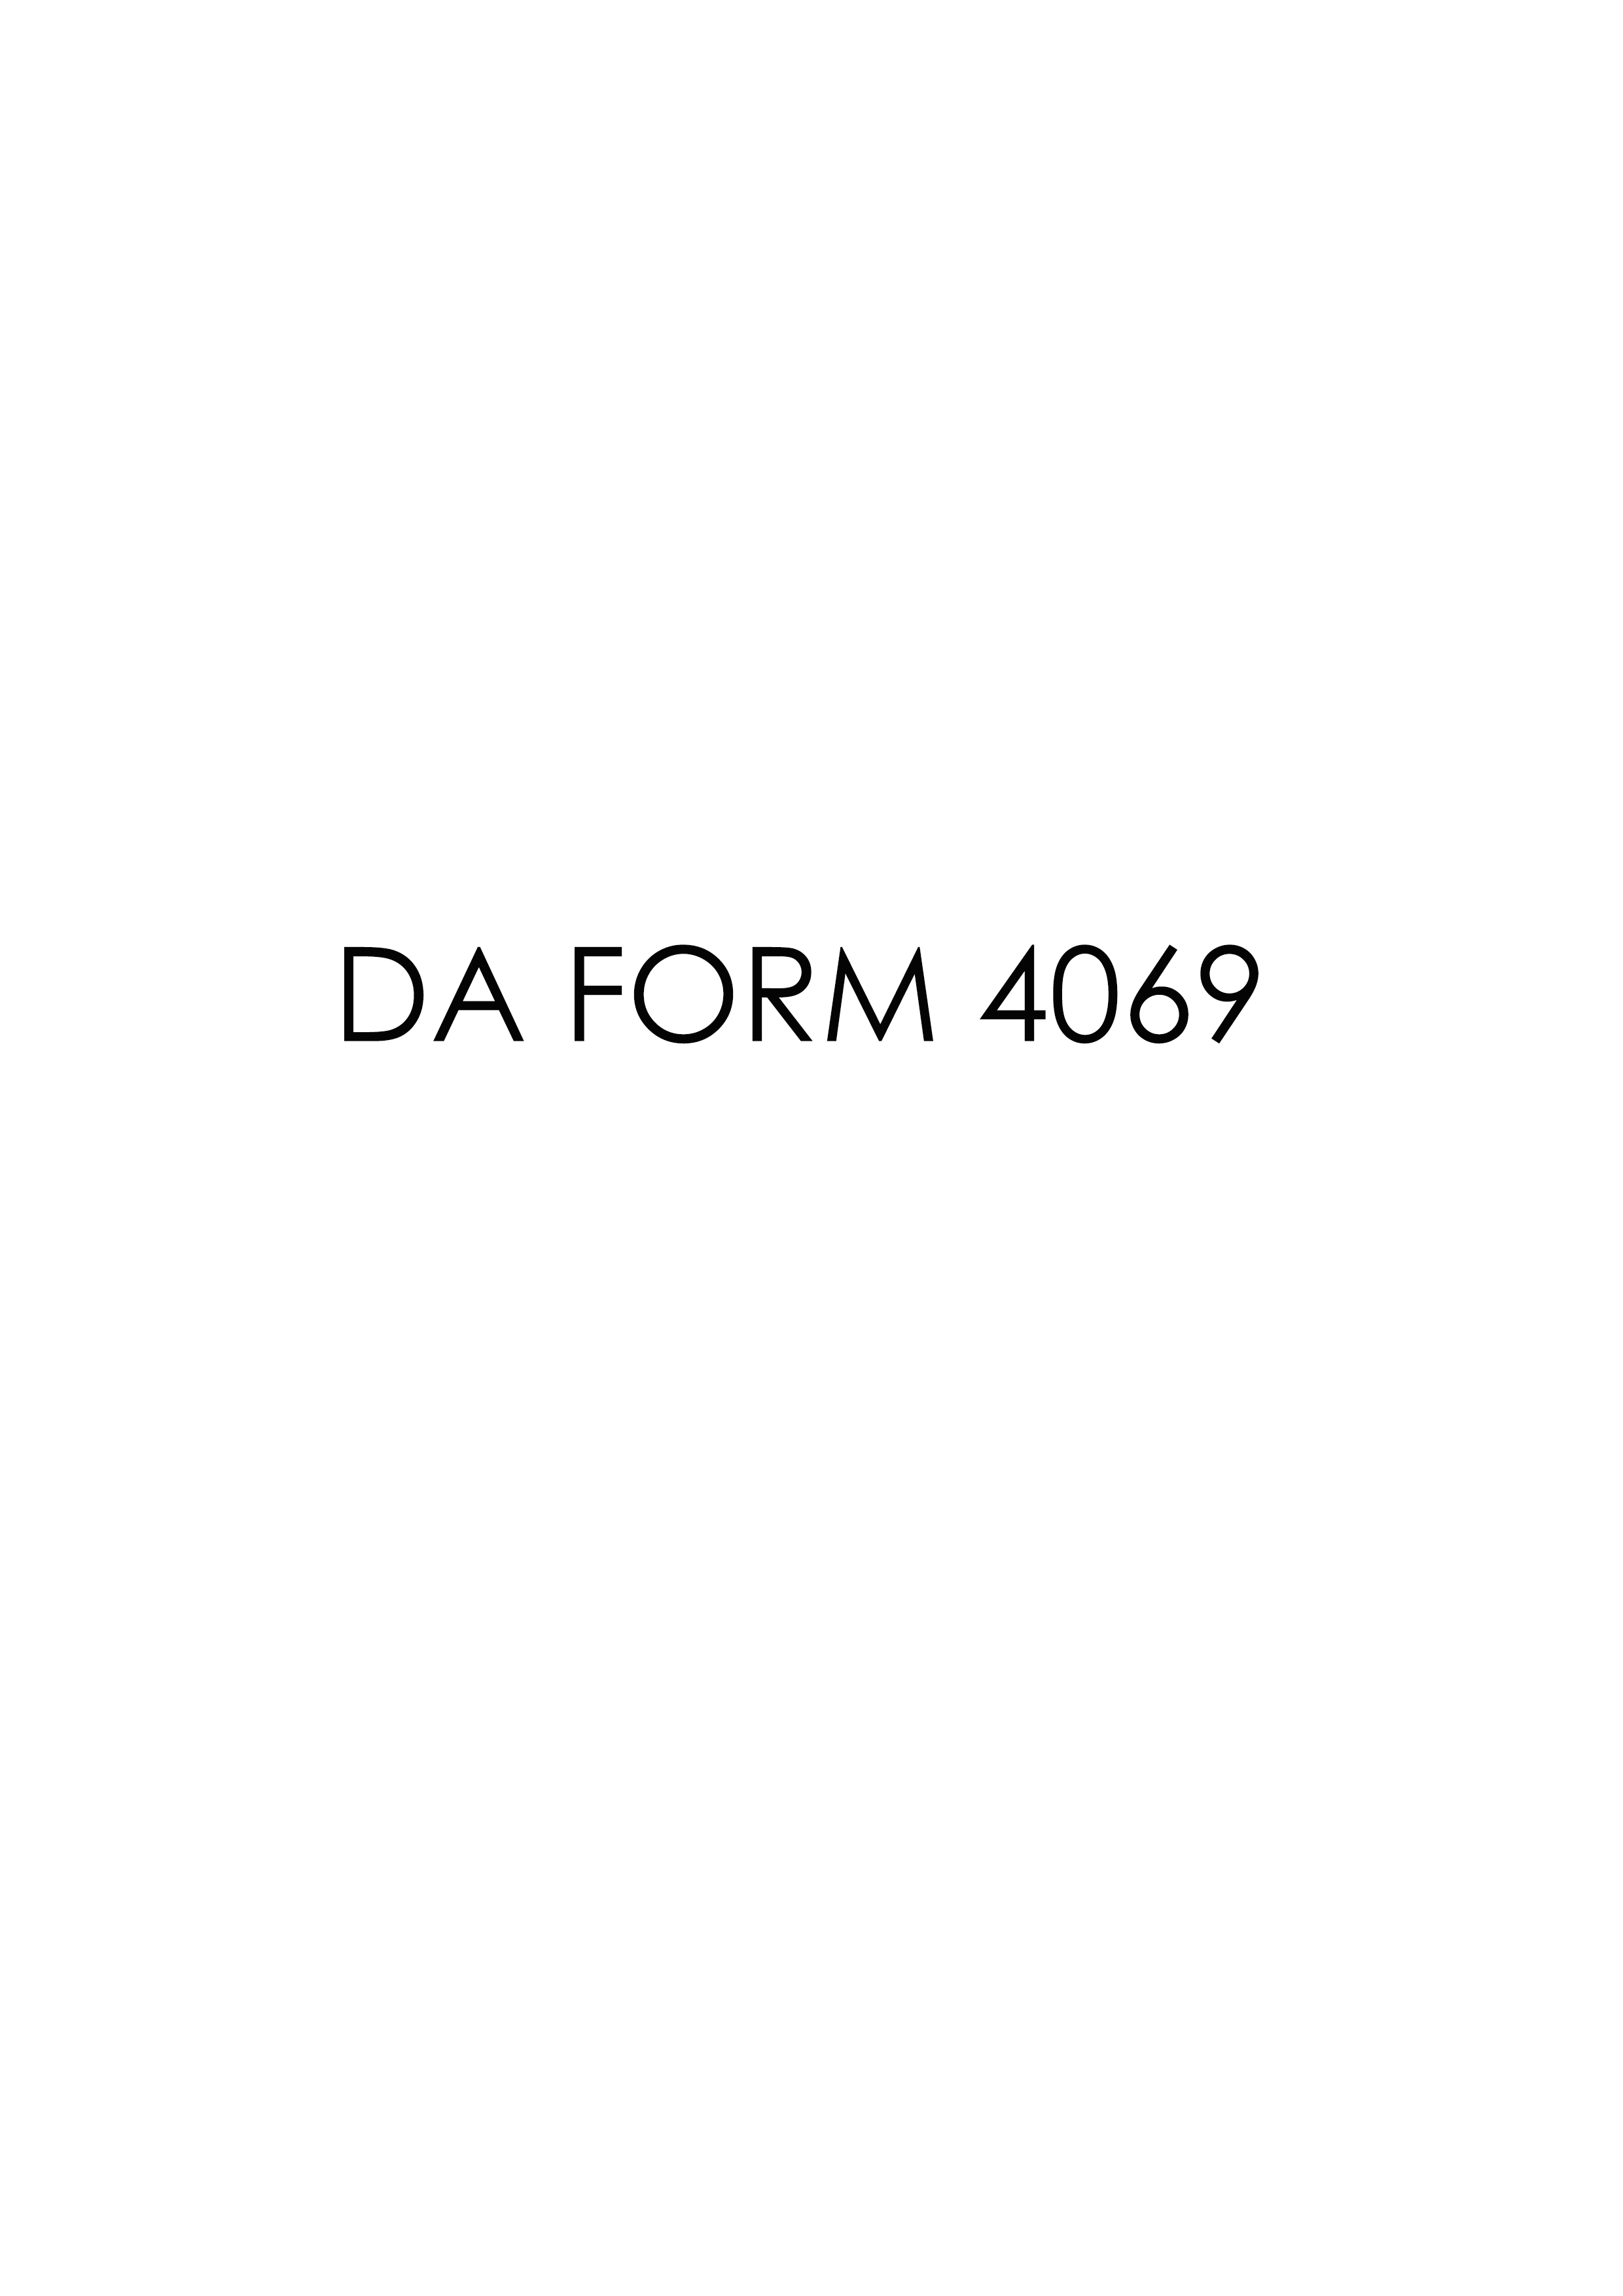 Download da 4069 Form